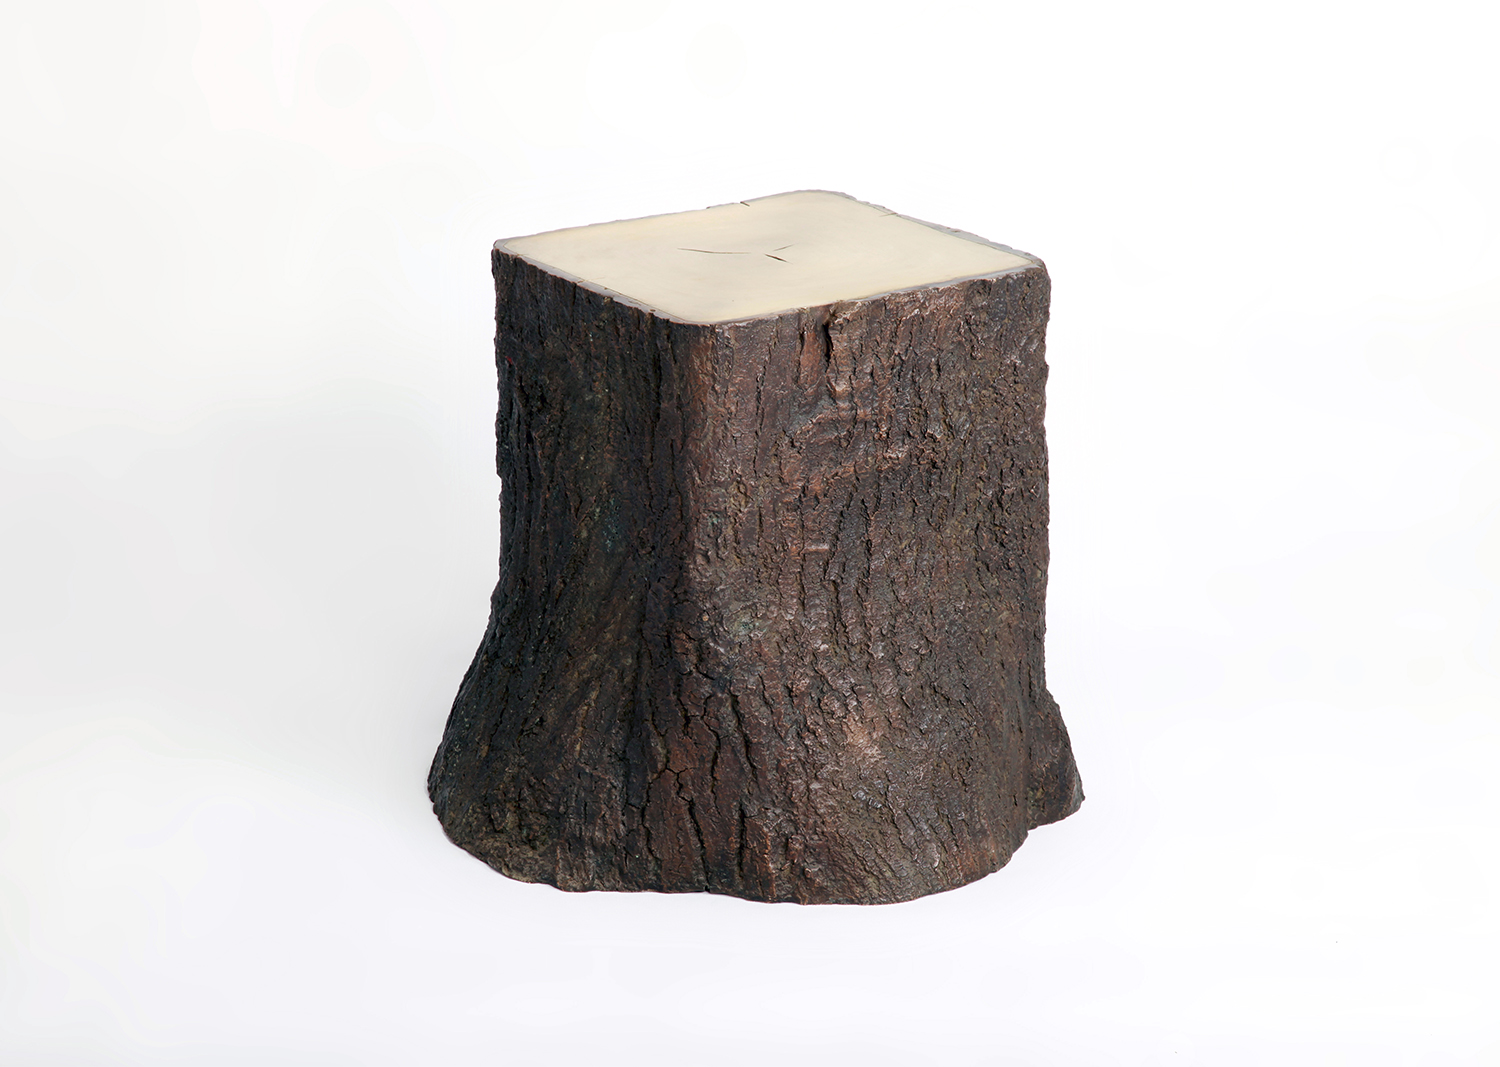 WOLFS + JUNG, Square Tree Trunk_stoolⅡ, cast bronze (lost wax technique), 48Wx38Dx43H cm, 2009@WOLFS + JUNG, Square Tree Trunk_stoolⅡ, cast bronze (lost wax technique), 48Wx38Dx43H cm, 2009